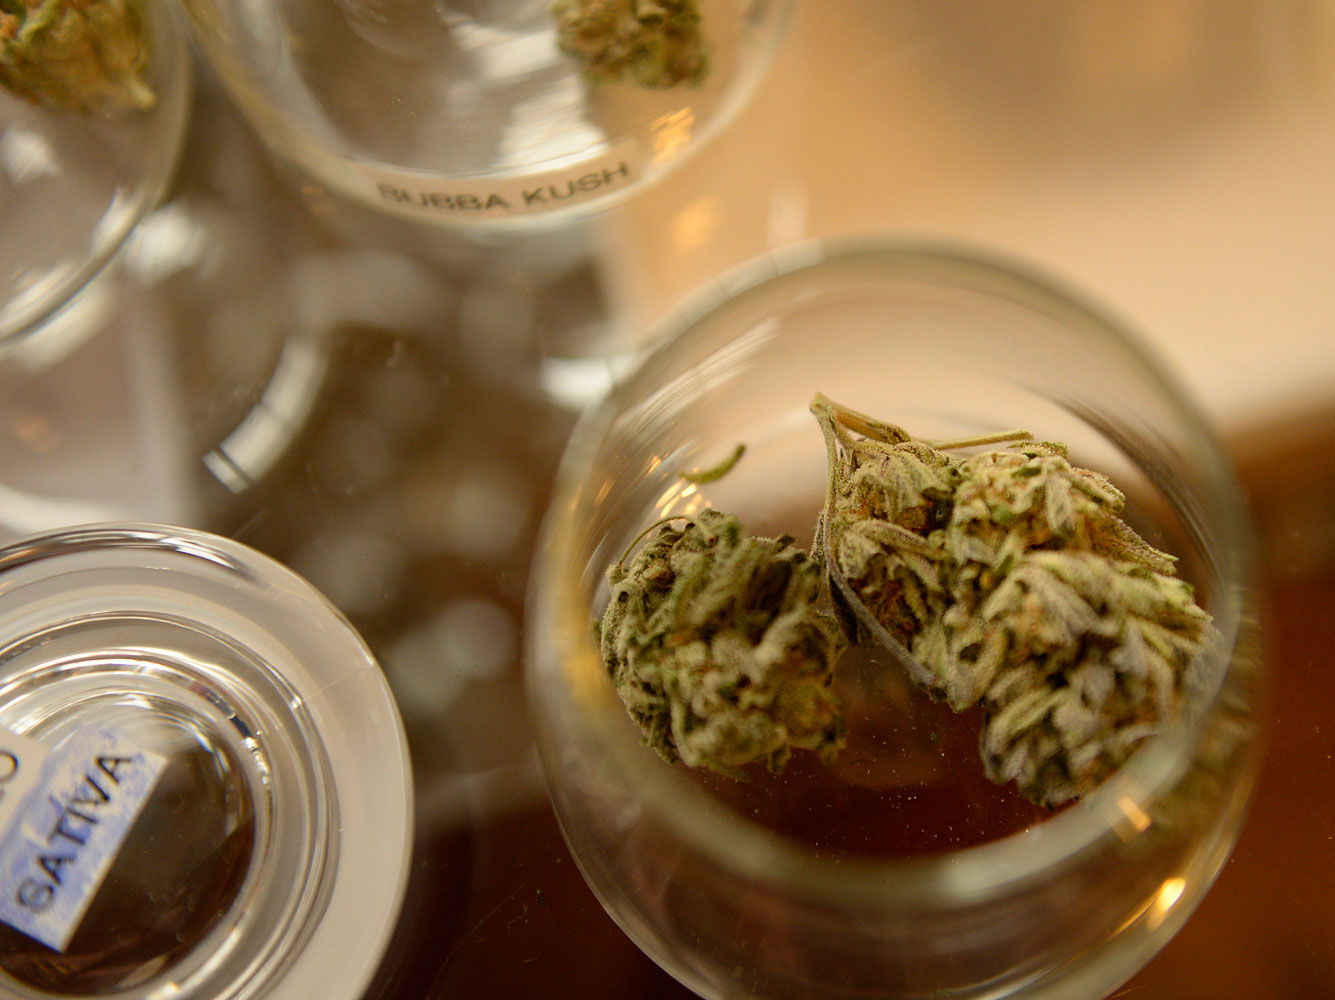 Marijuana in jars for customers to view at 3D Cannabis Center in Denver, Jan. 01 2014. (RJ Sangosti&amp;mdash;Denver Post/Getty Images)